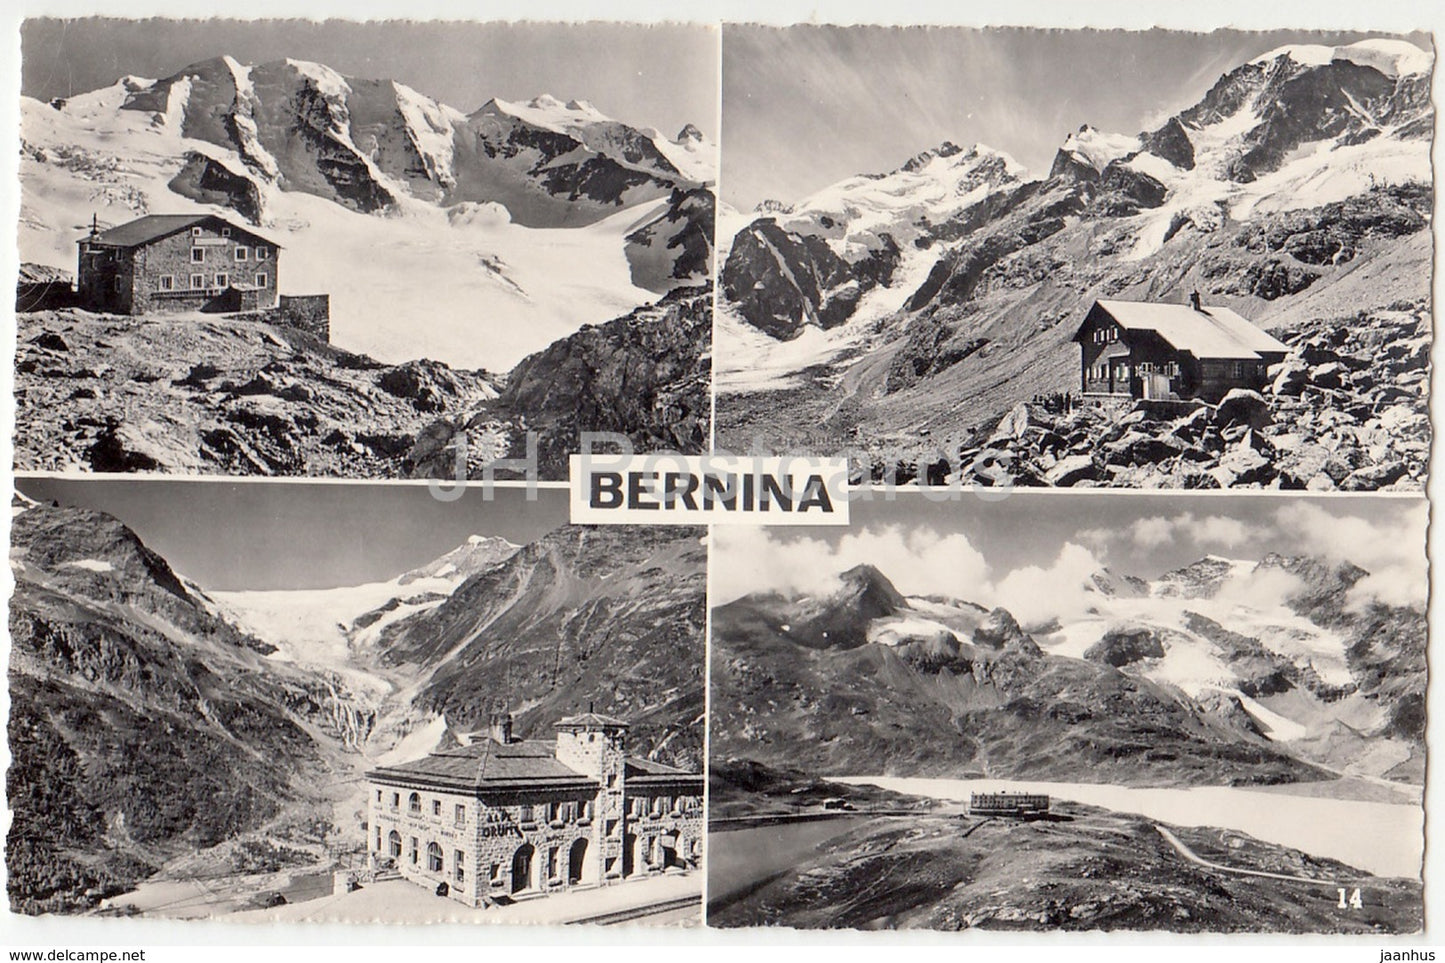 Bernina - multiview - Buffet Alp Grum 14 - Switzerland - old postcard - unused - JH Postcards